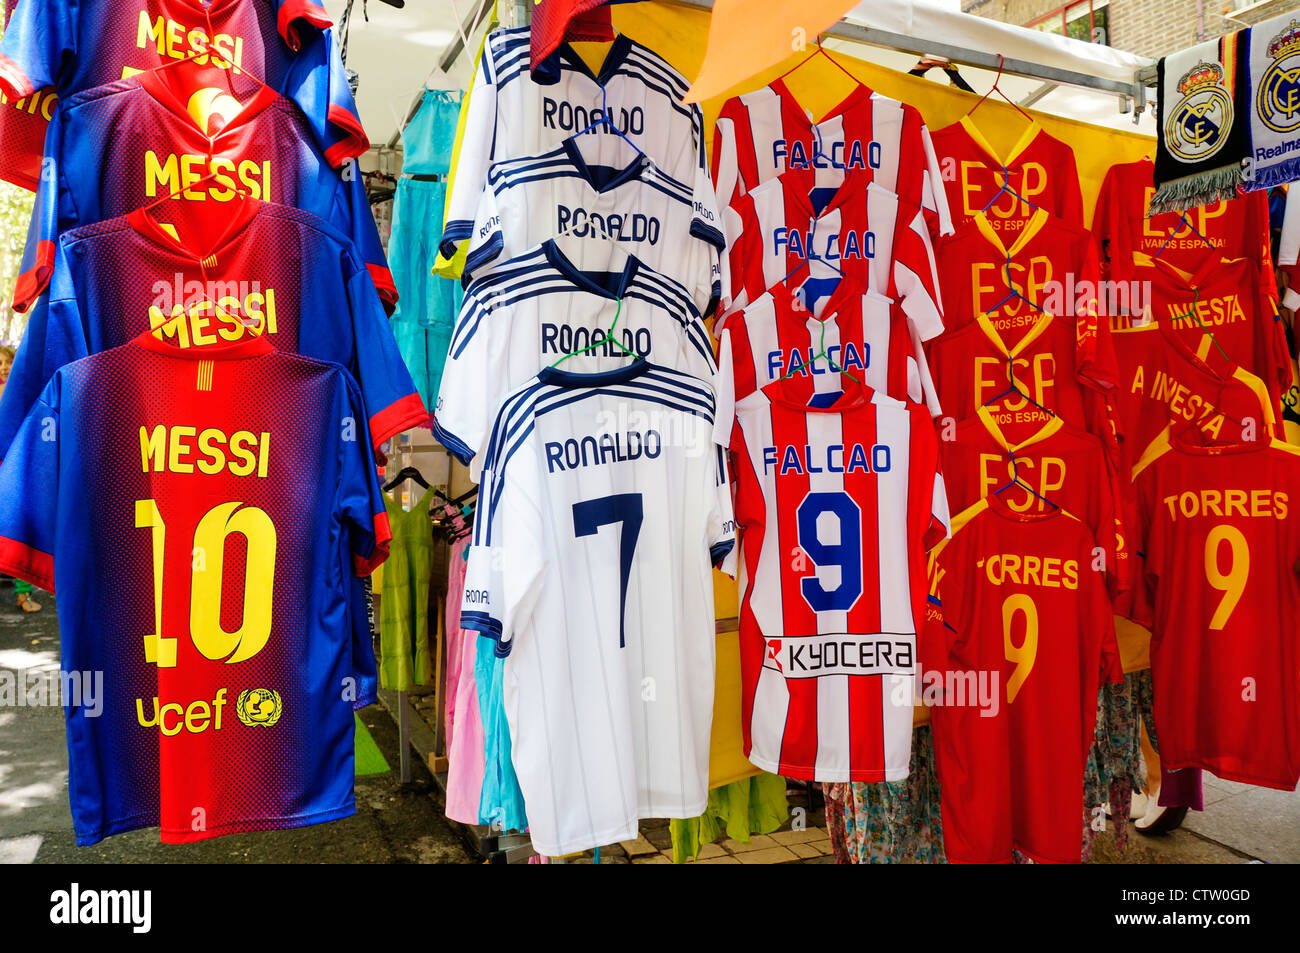 Scene shirts football Spain, from El Rastro flea market in Madrid Spain. Stock Photo